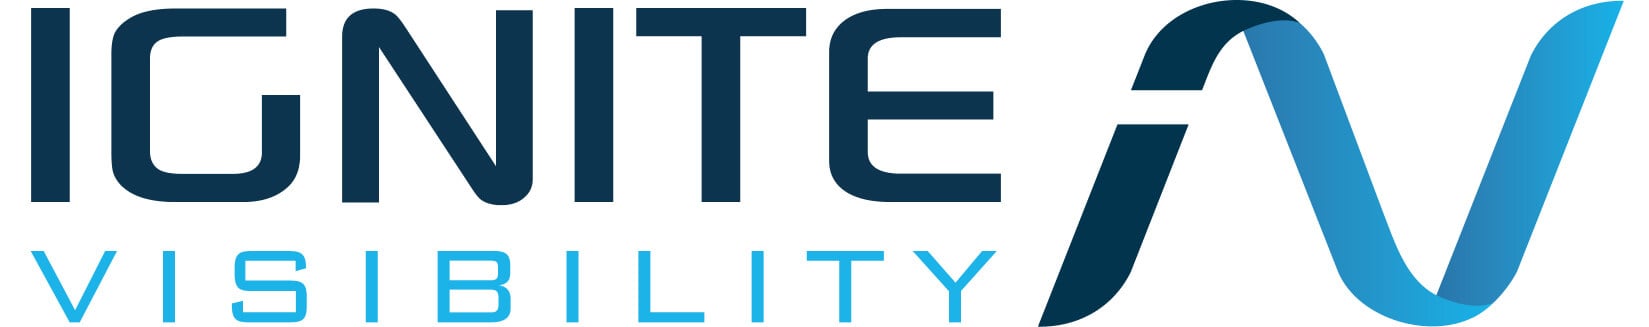 Best Dental SEO Agency Logo: Ignite Visibility